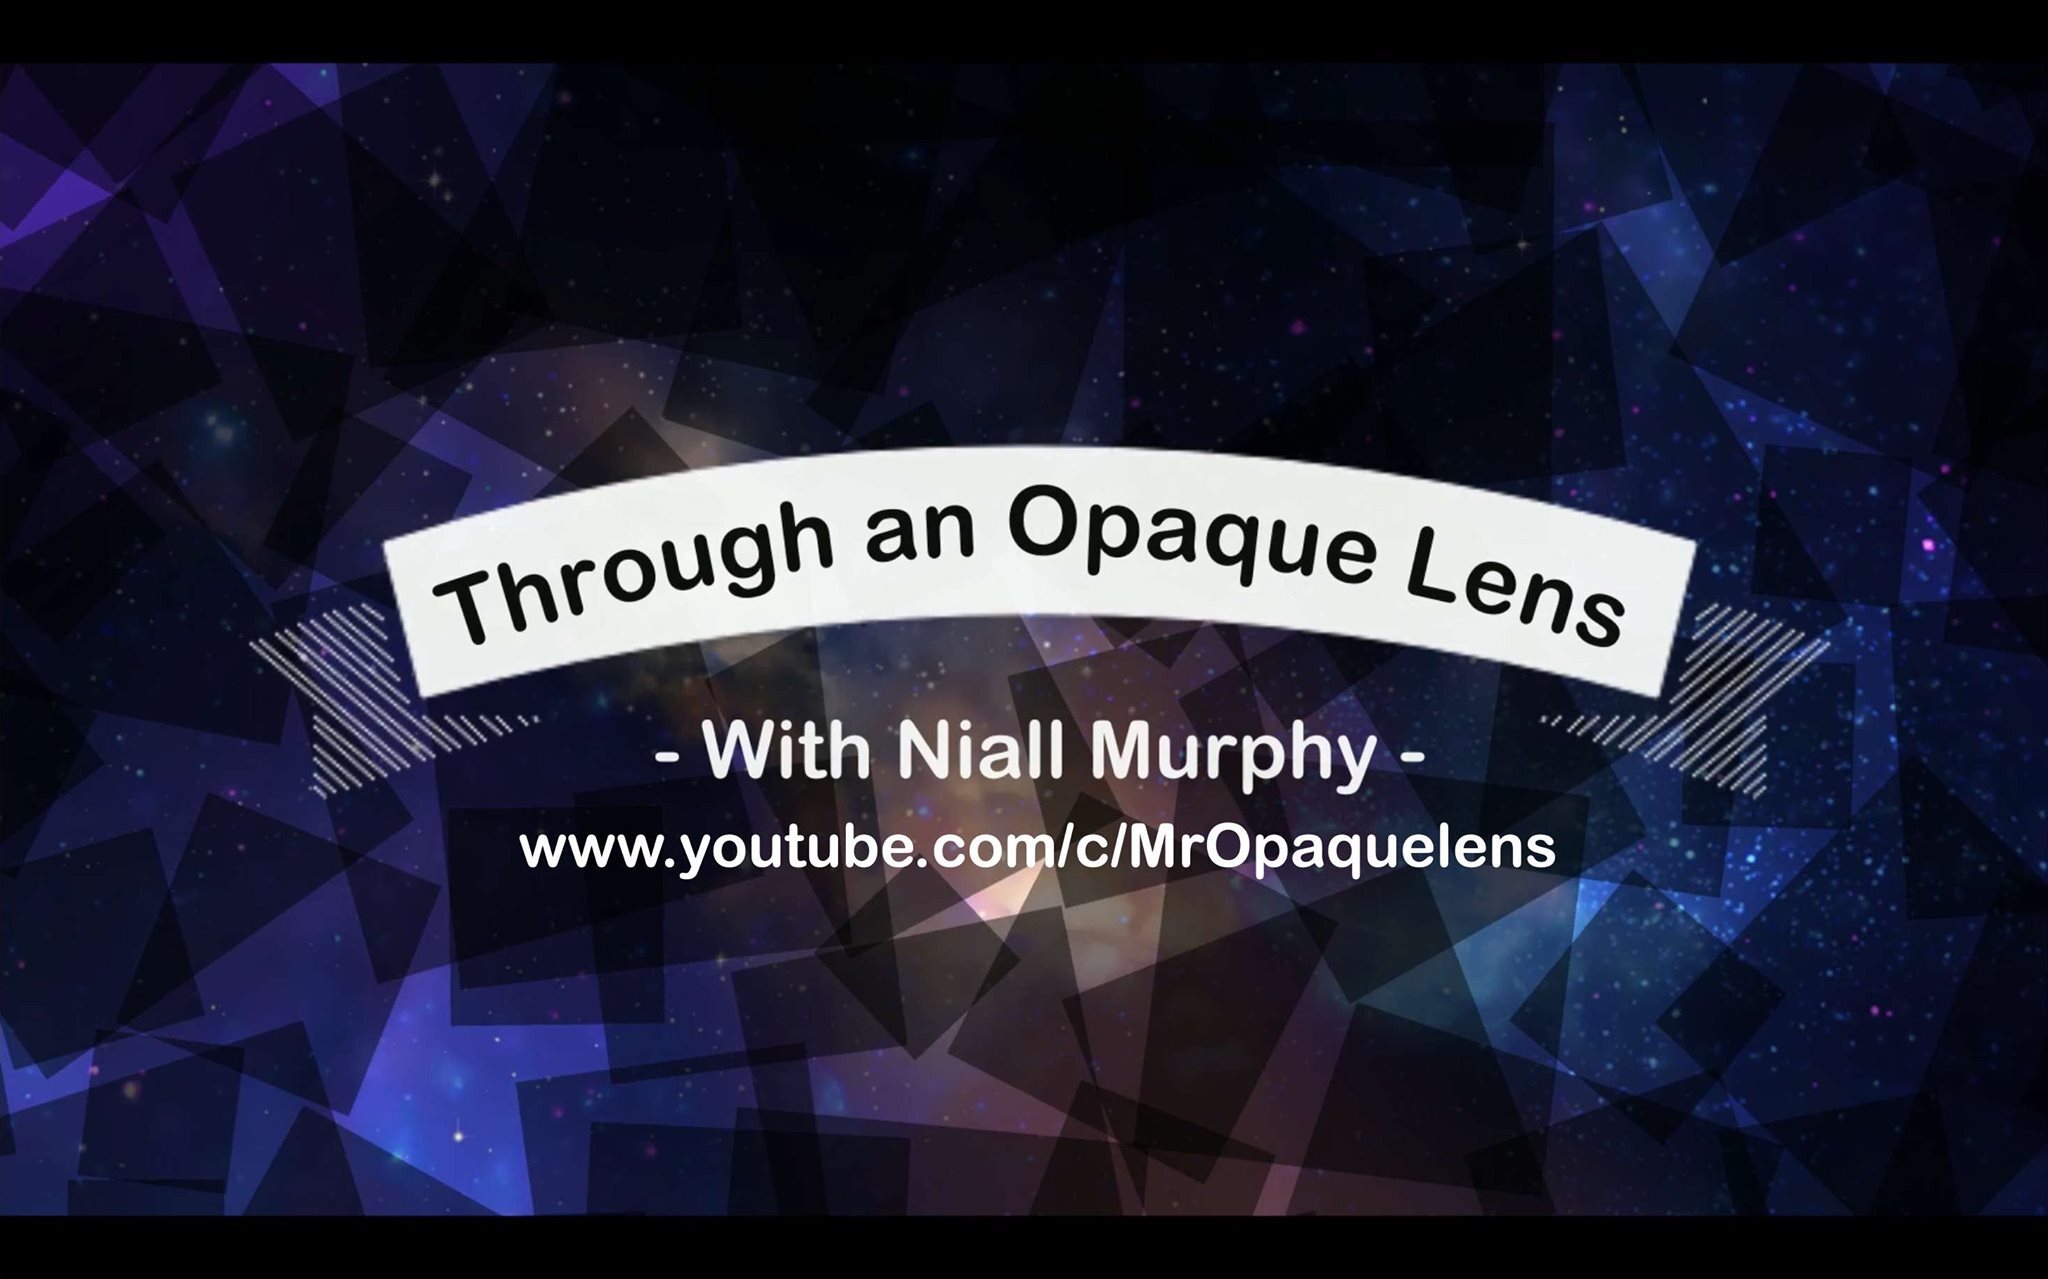 Through_an_Opaque_Lens_with_Niall_Murphy_logo.jpg